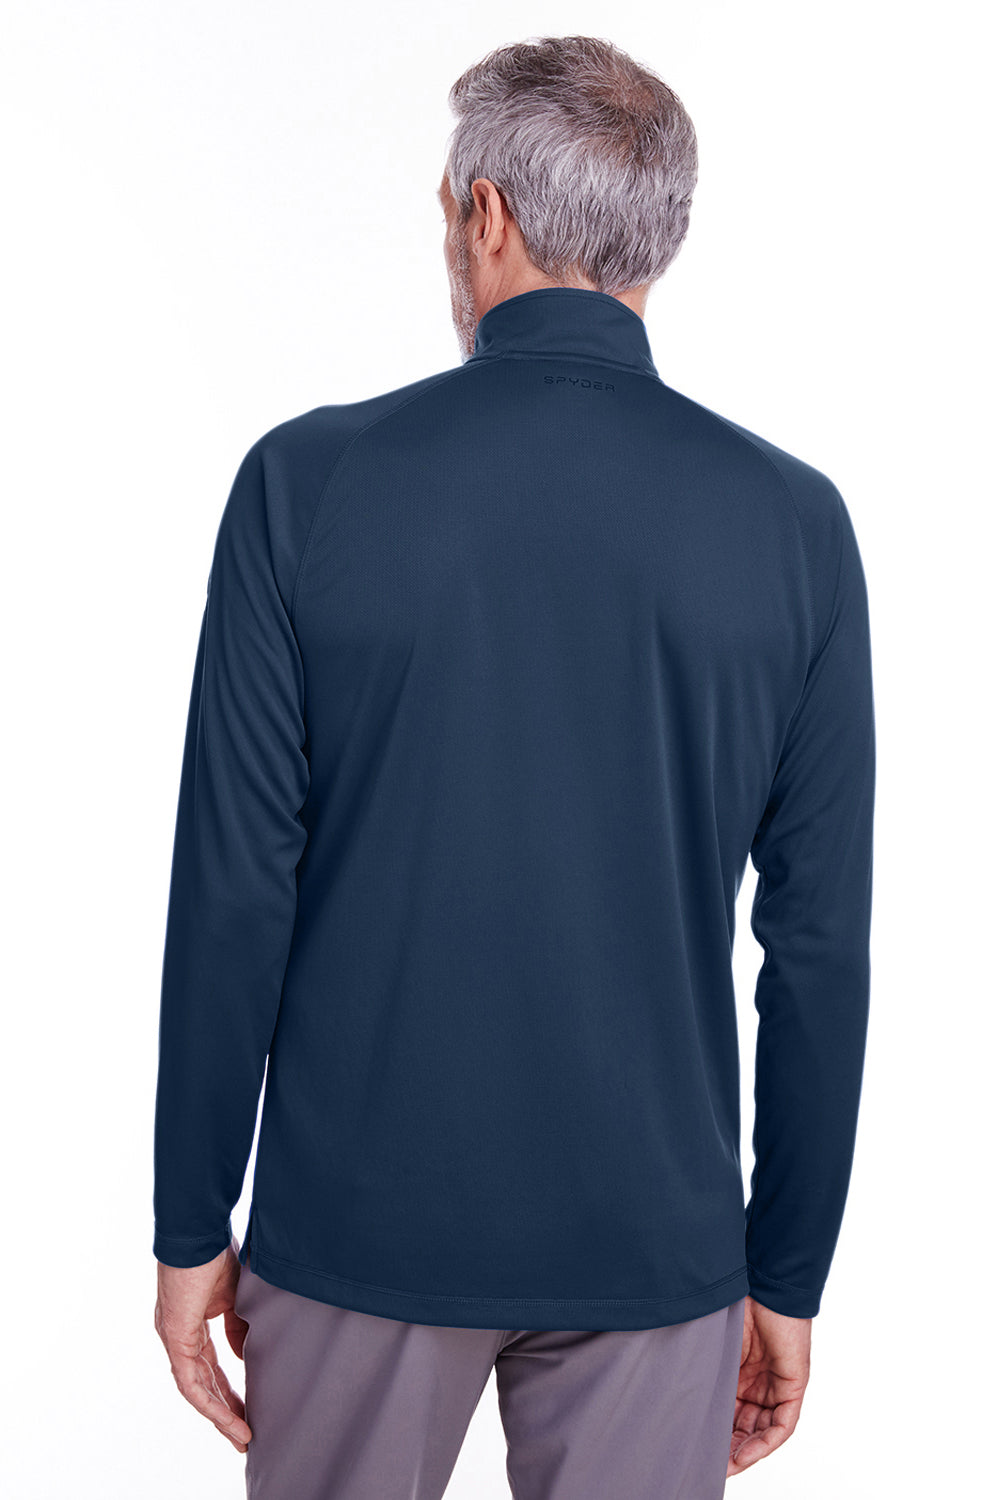 Spyder S16797 Mens Freestyle 1/4 Zip Sweatshirt Navy Blue Back